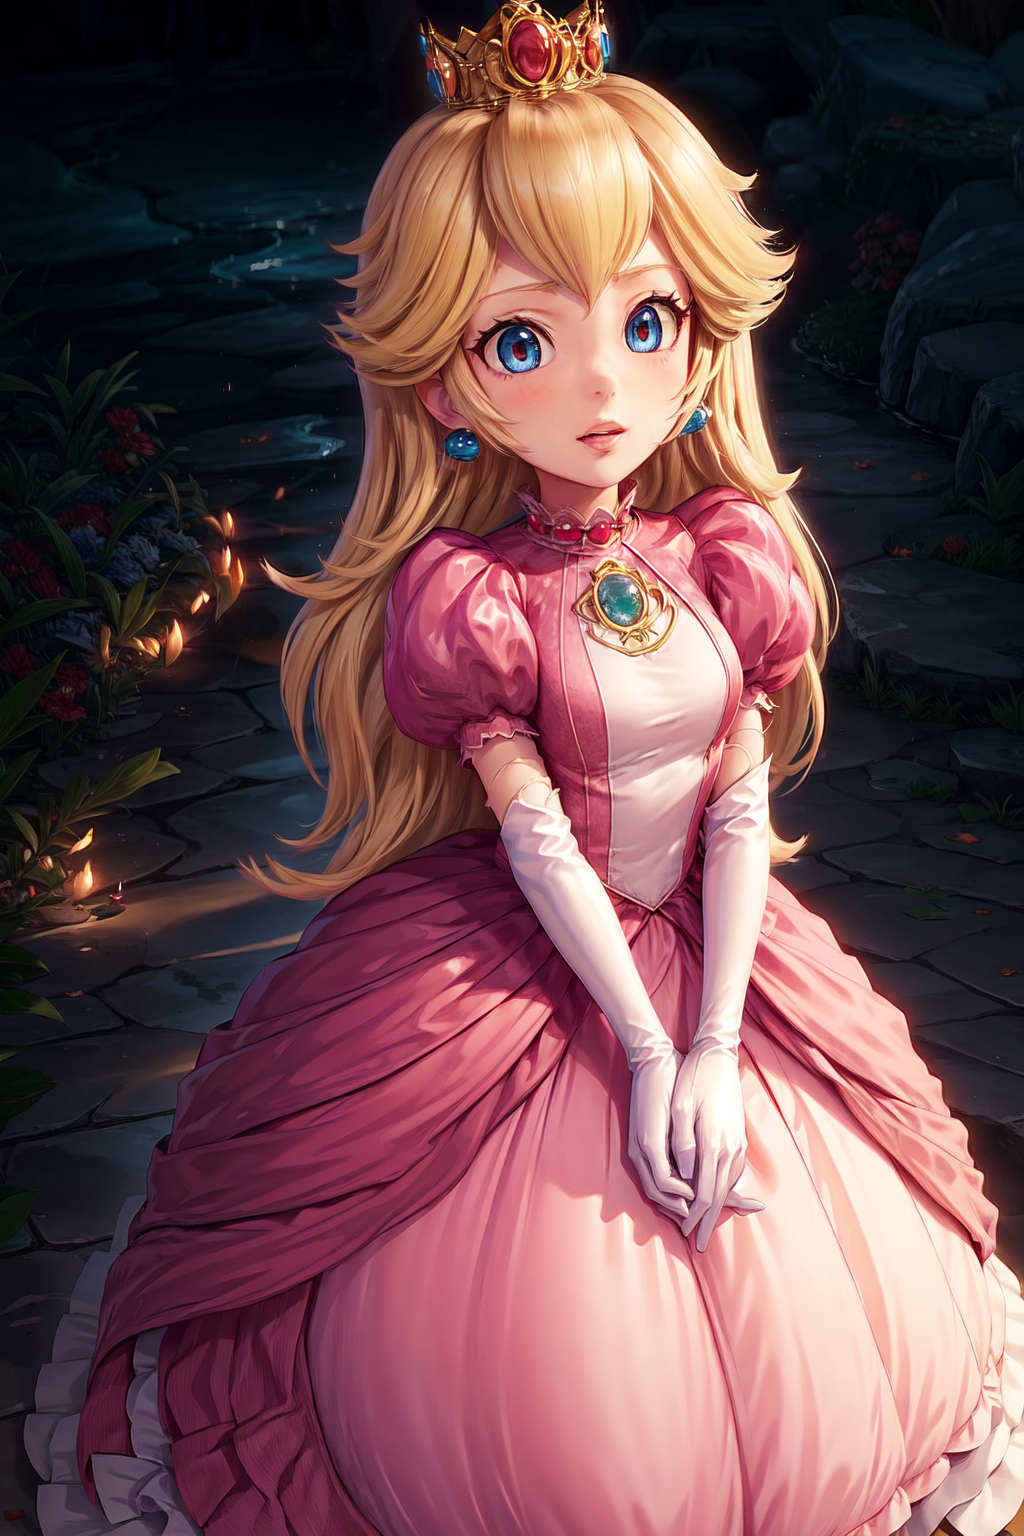 Princess Peach (Super Mario) - anime concept #1 by QuantumReel on DeviantArt